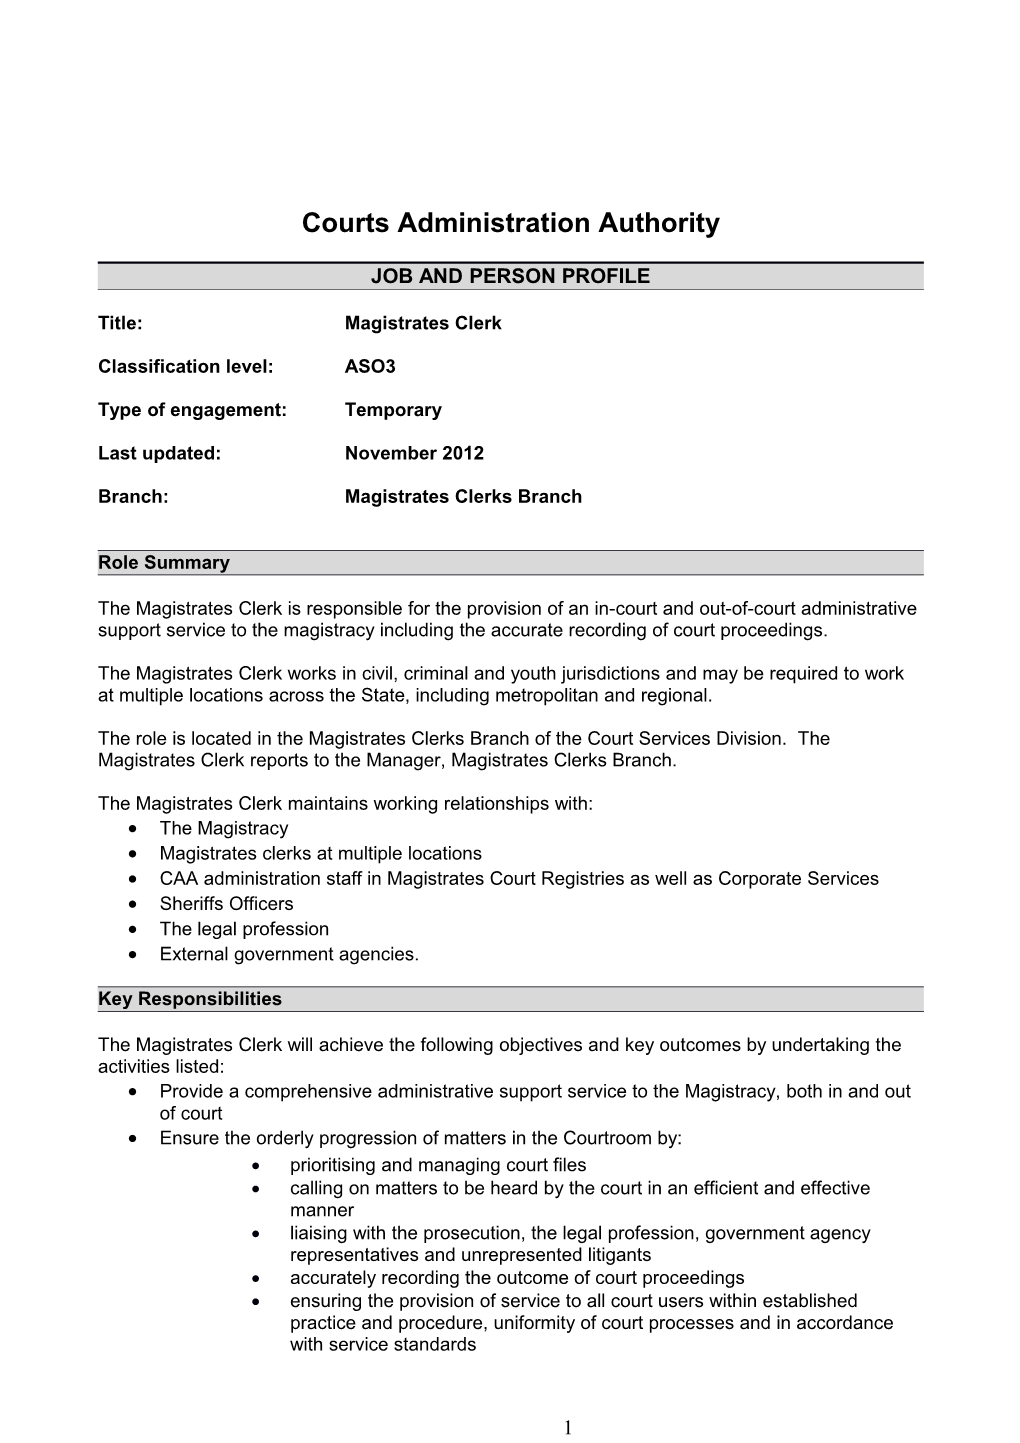 Magistrates Clerk Job & Person Profile